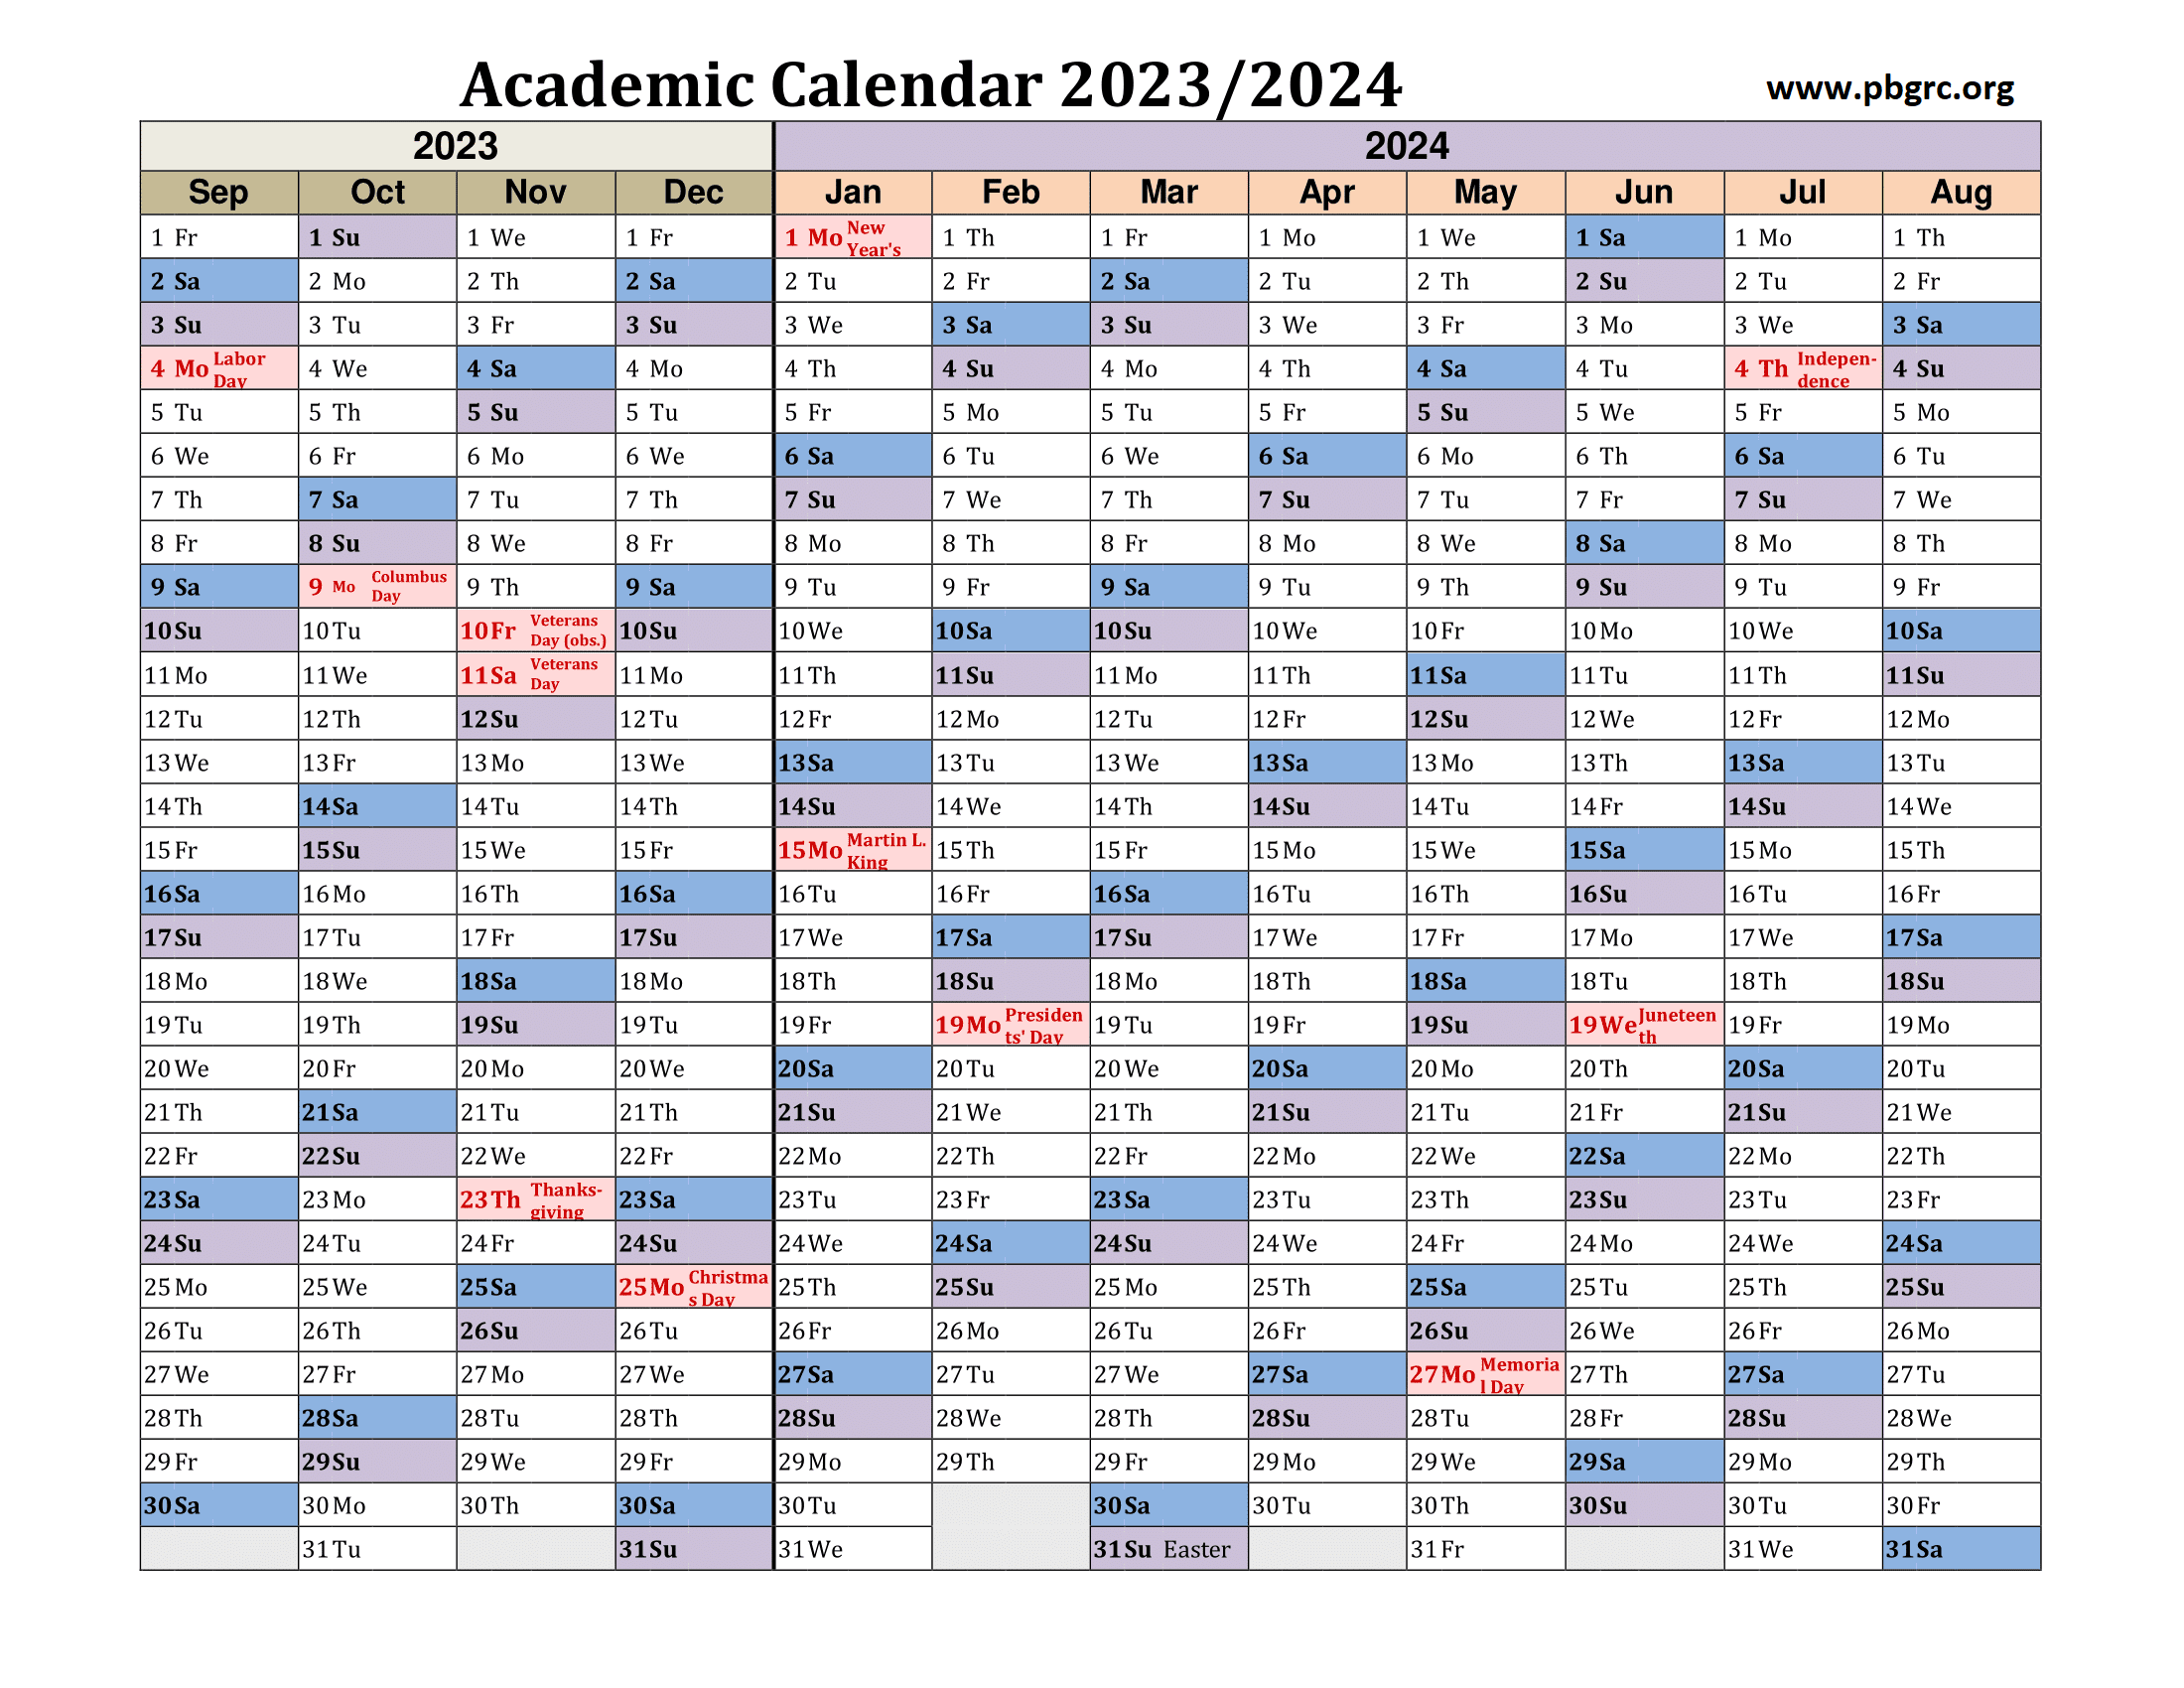 Academic Calendar Sep 2023 to Aug 2024